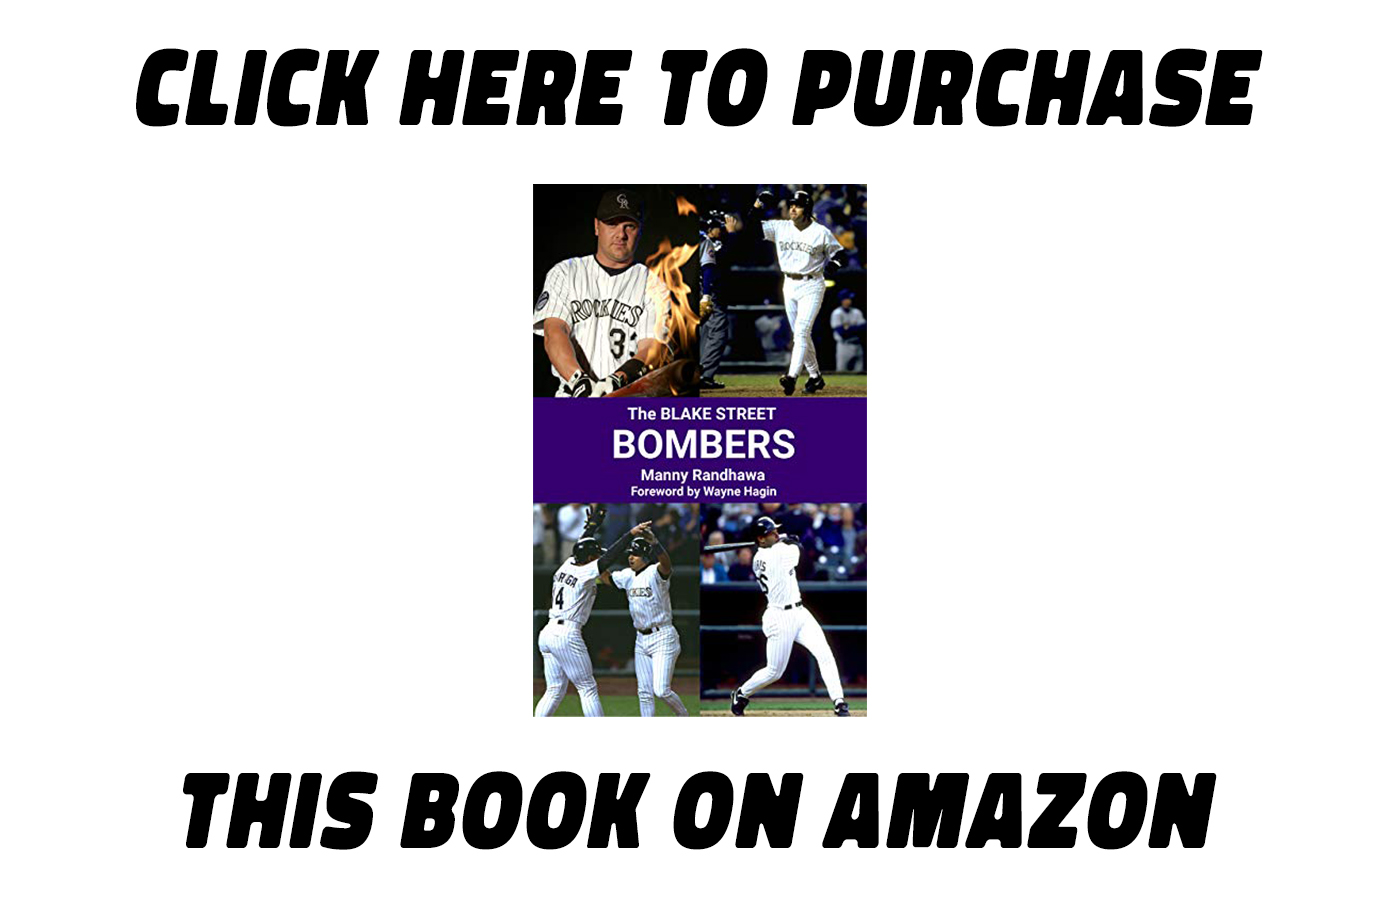 The Blake Street Bombers book